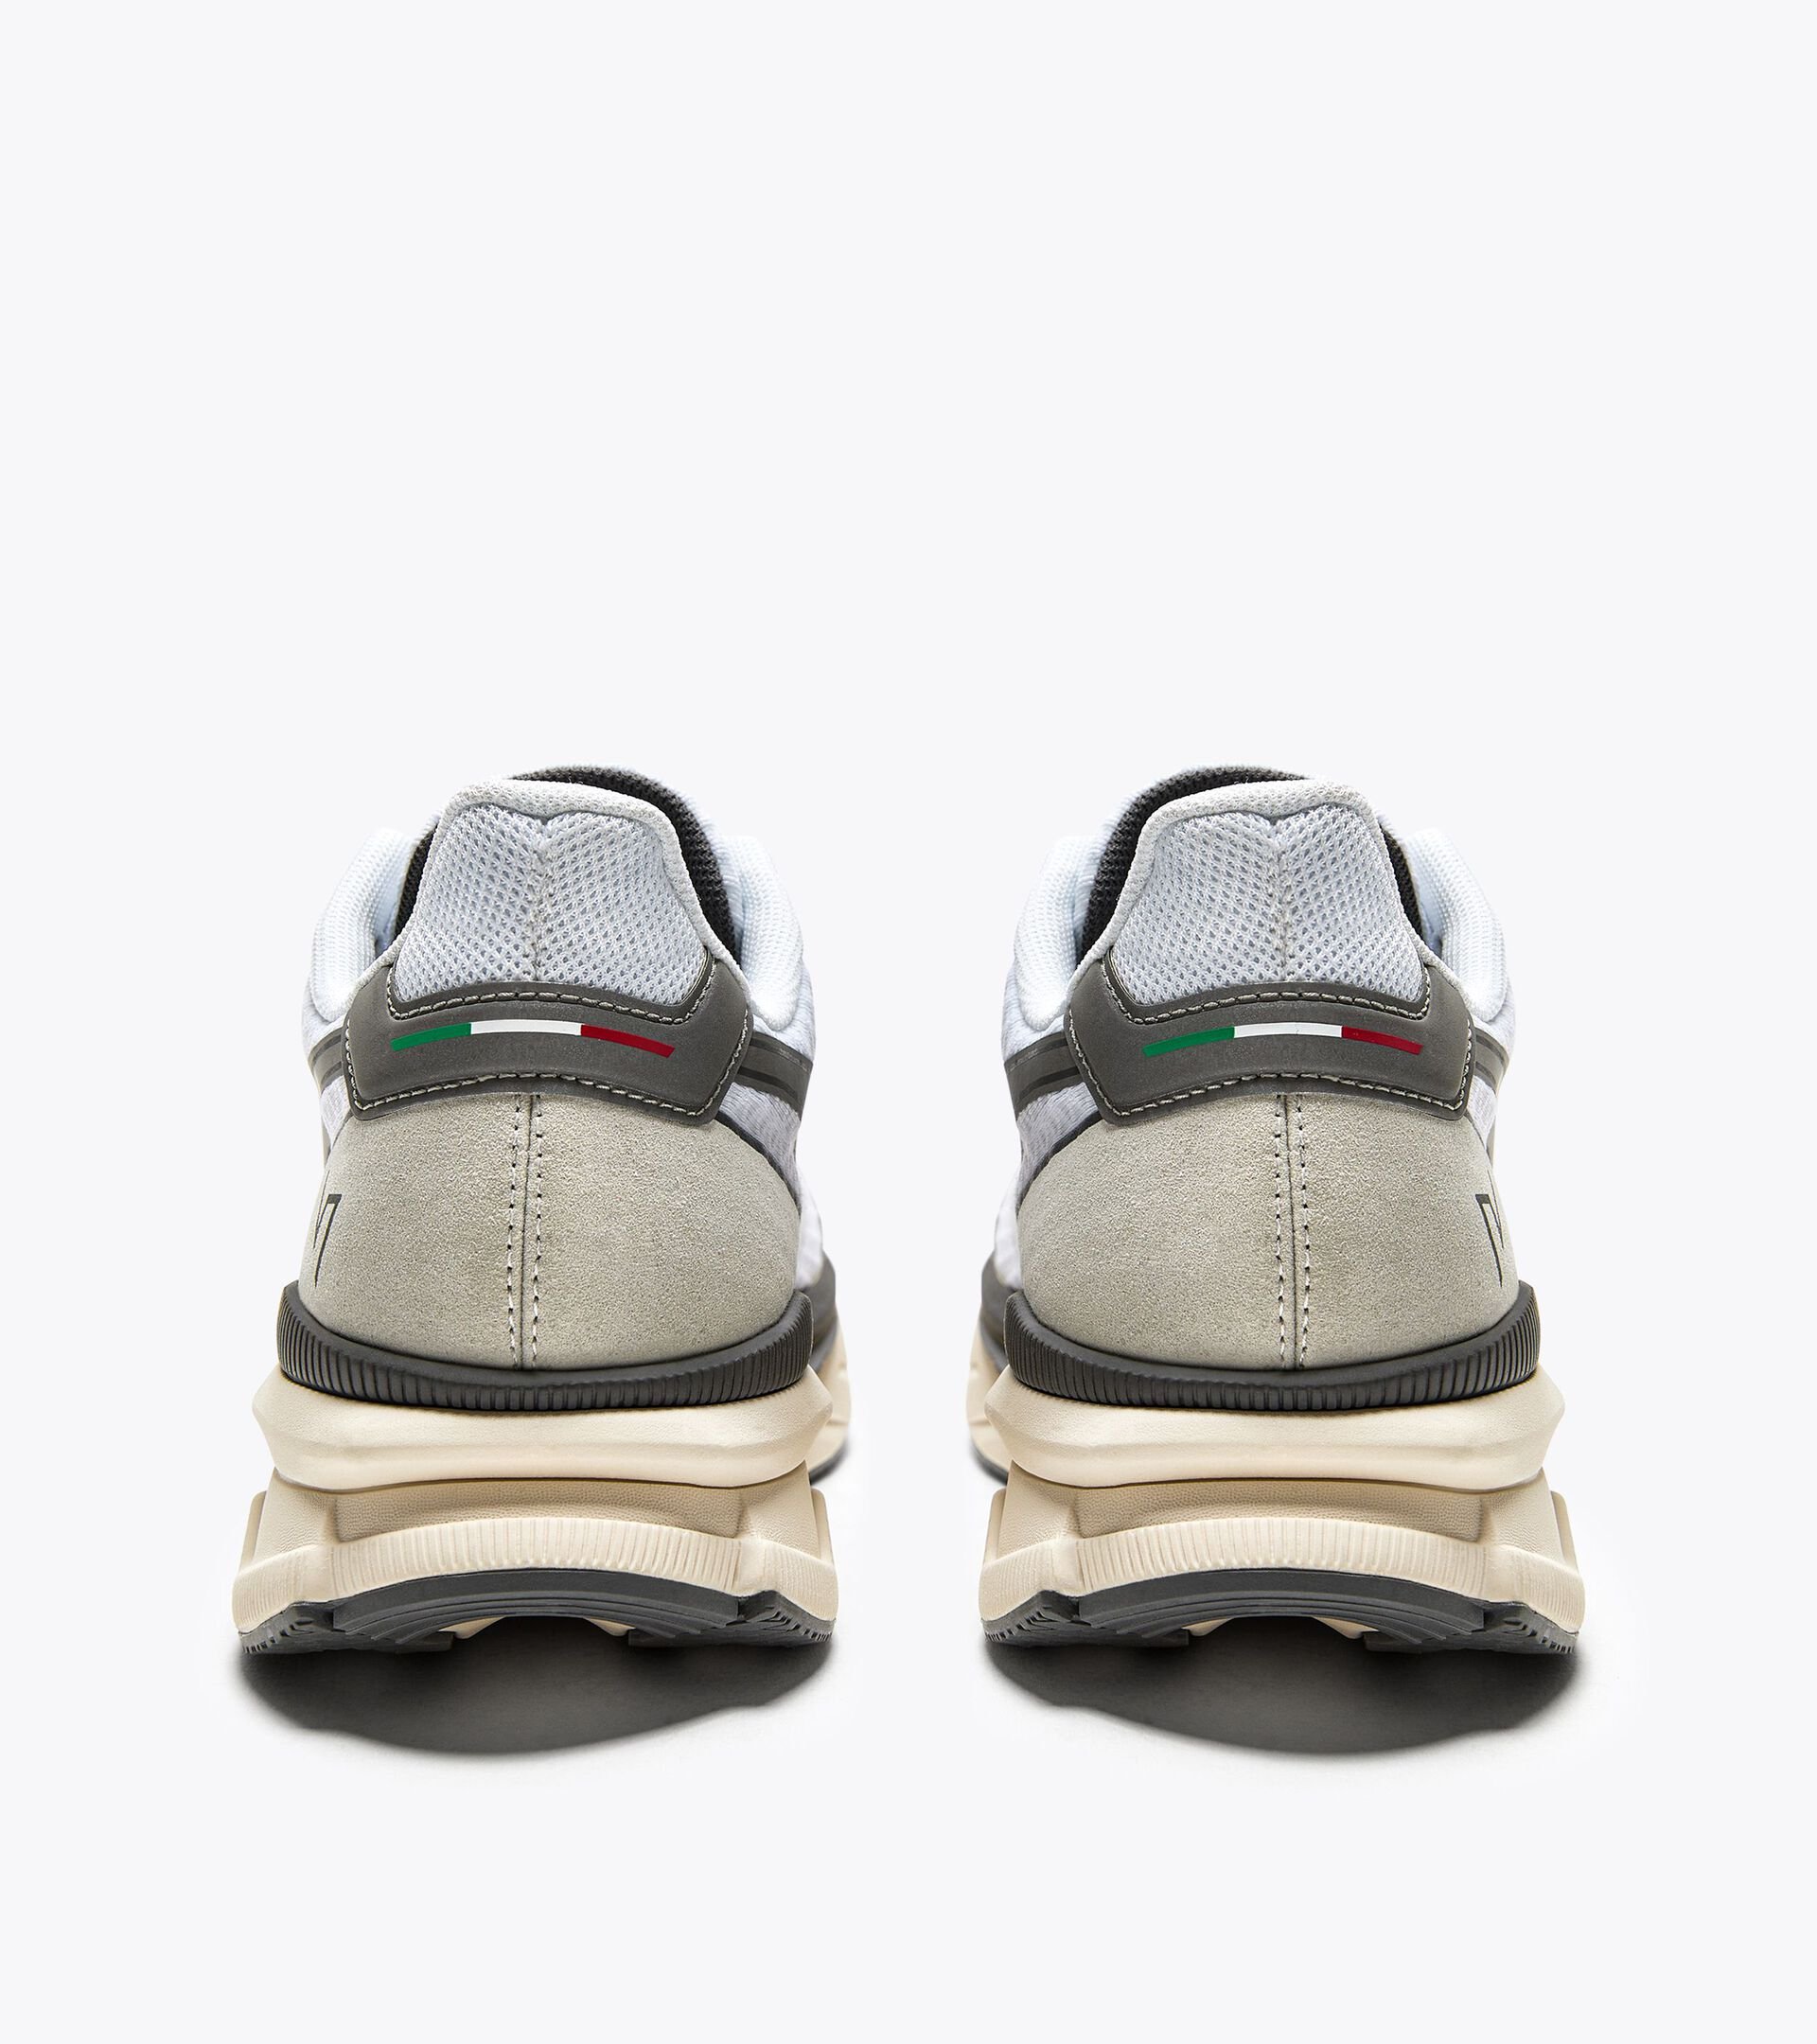 Made in Italy Running shoes - Gender neutral ATOMO V7000 WHT/SILVER DD/WHISPER WHITE - Diadora